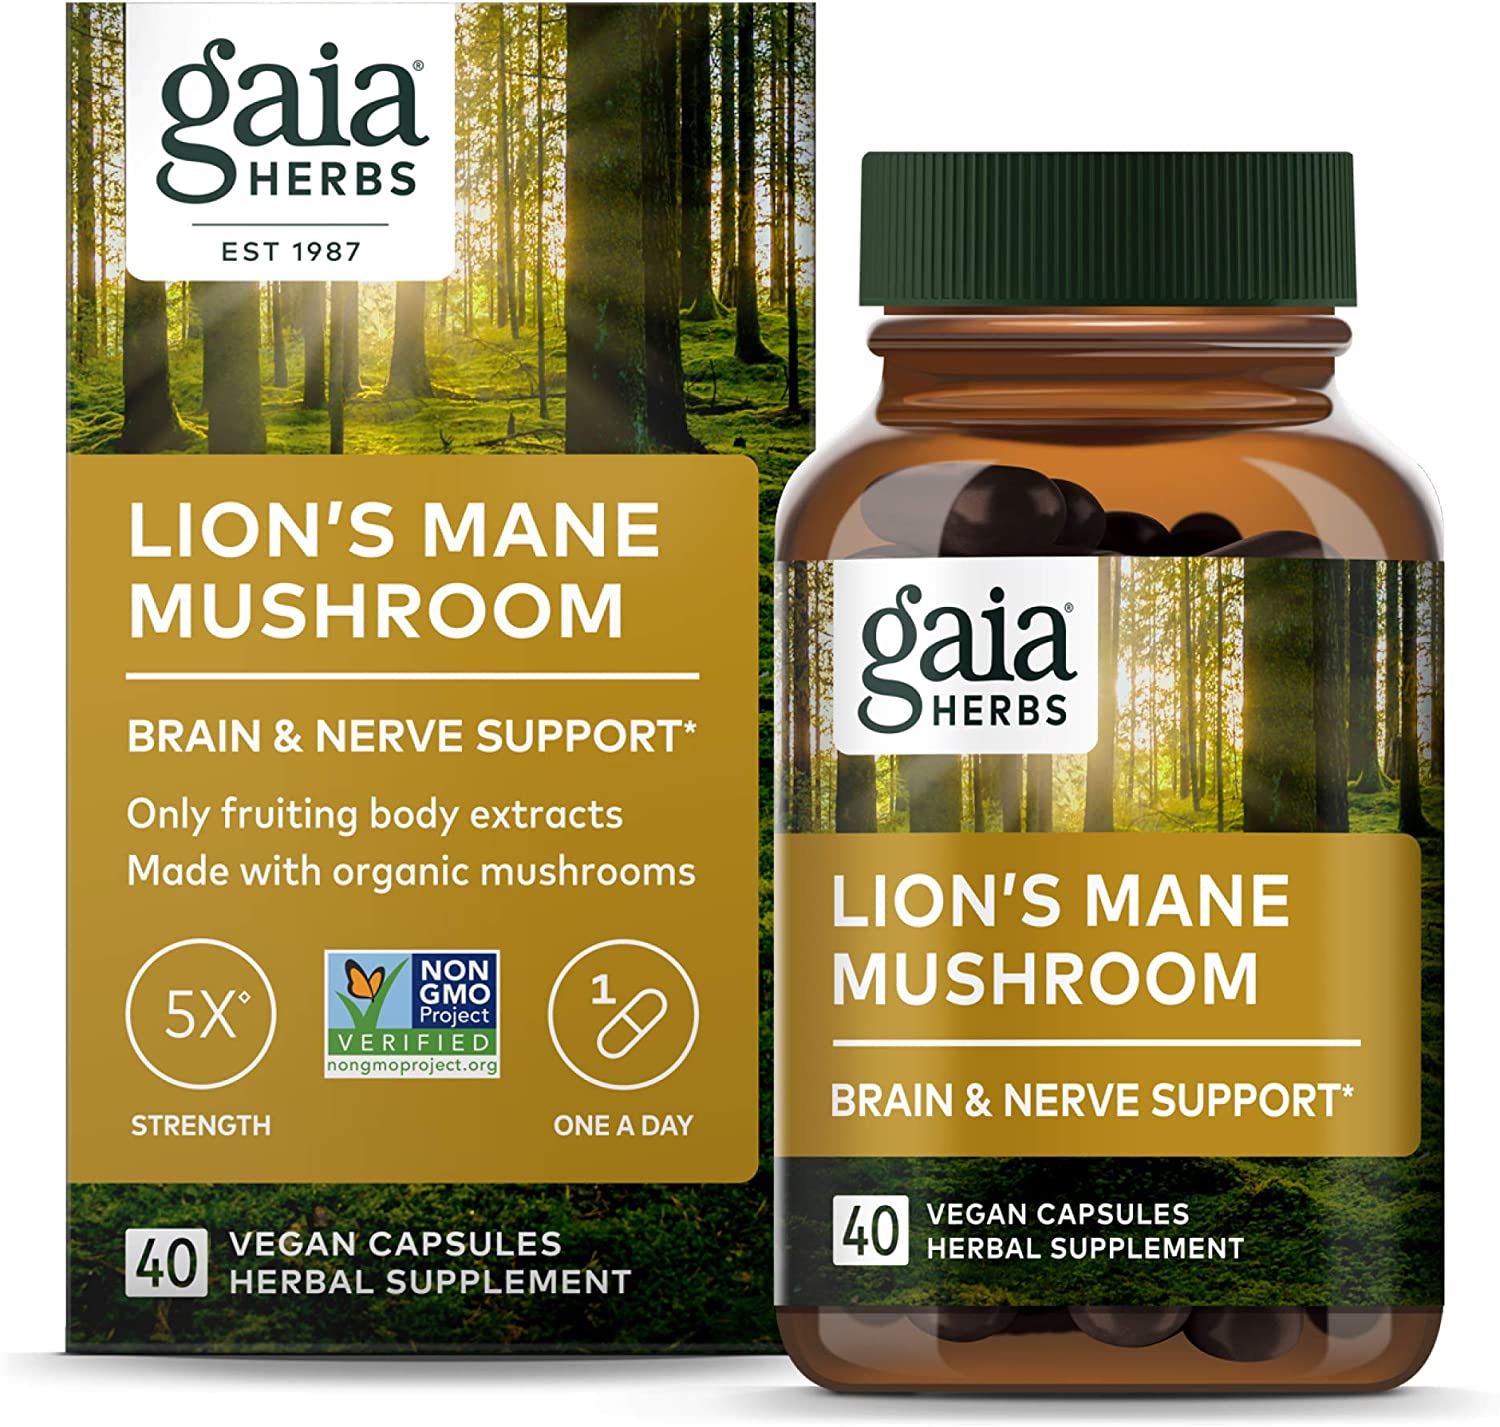 Gaia Herbs Lions Mane Mushroom 40 Vegan Capsules 